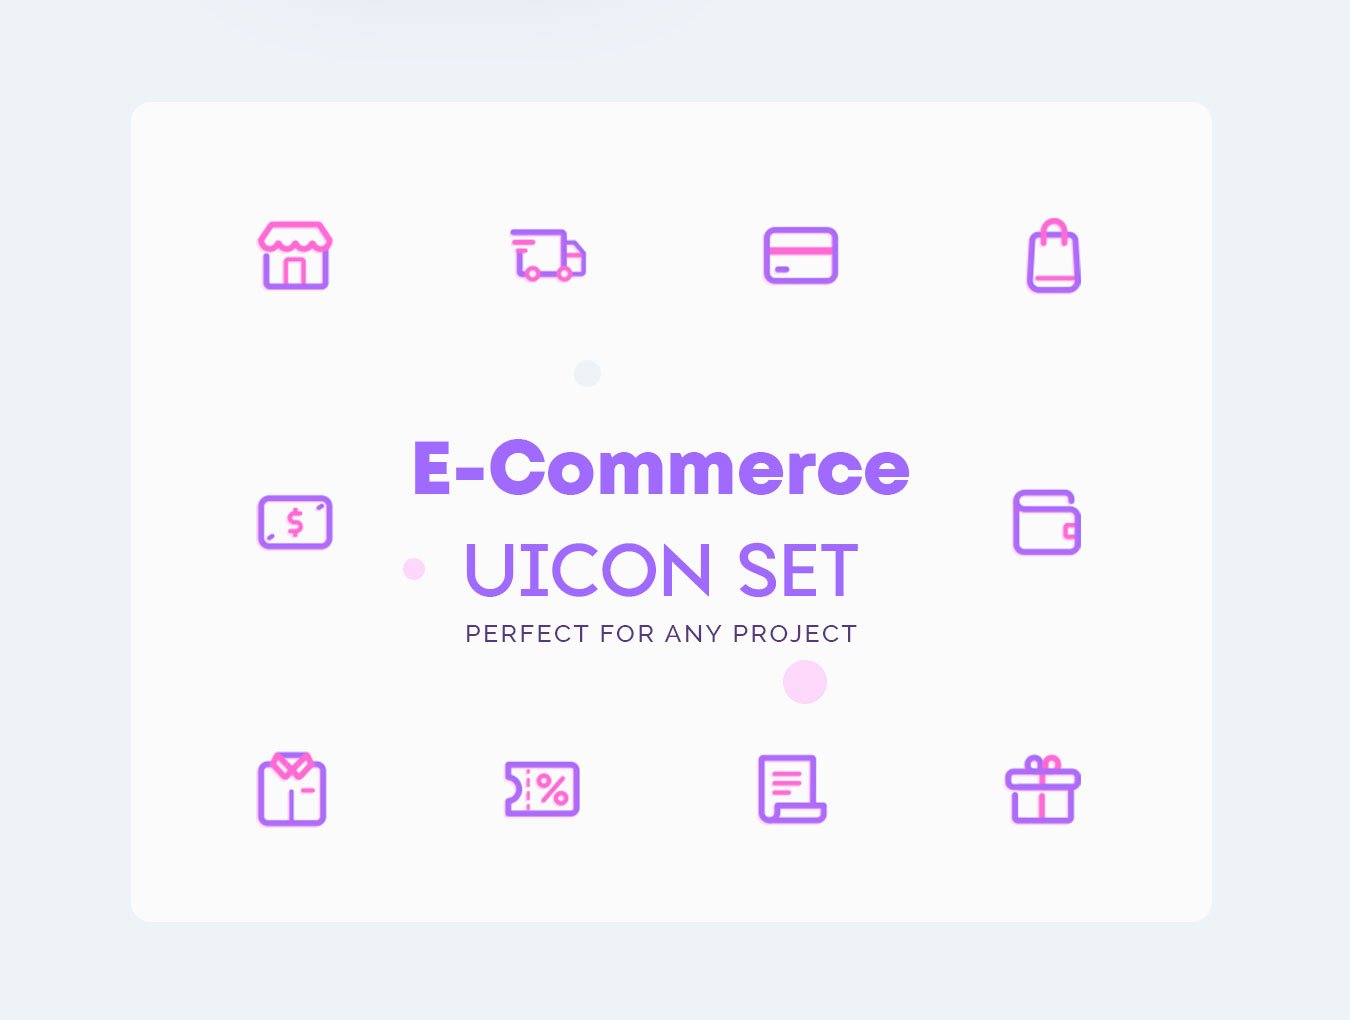 Ecommerce - Online Shopping Icons Se cover image.